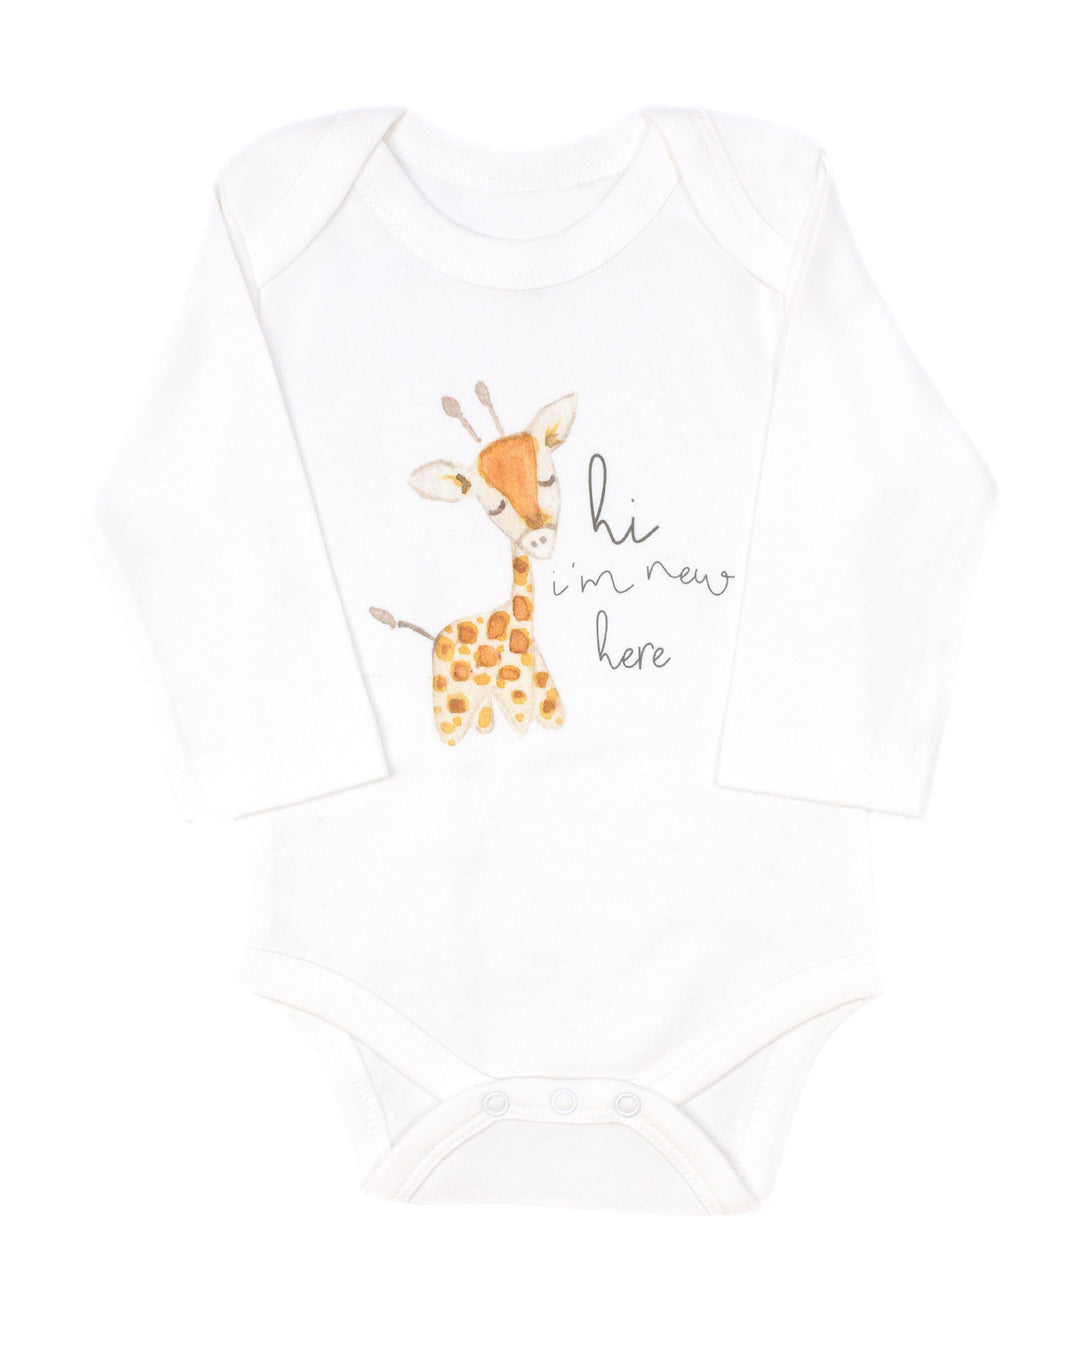 Charley the Giraffe | Organic Baby Gift Basket | Baby Boy